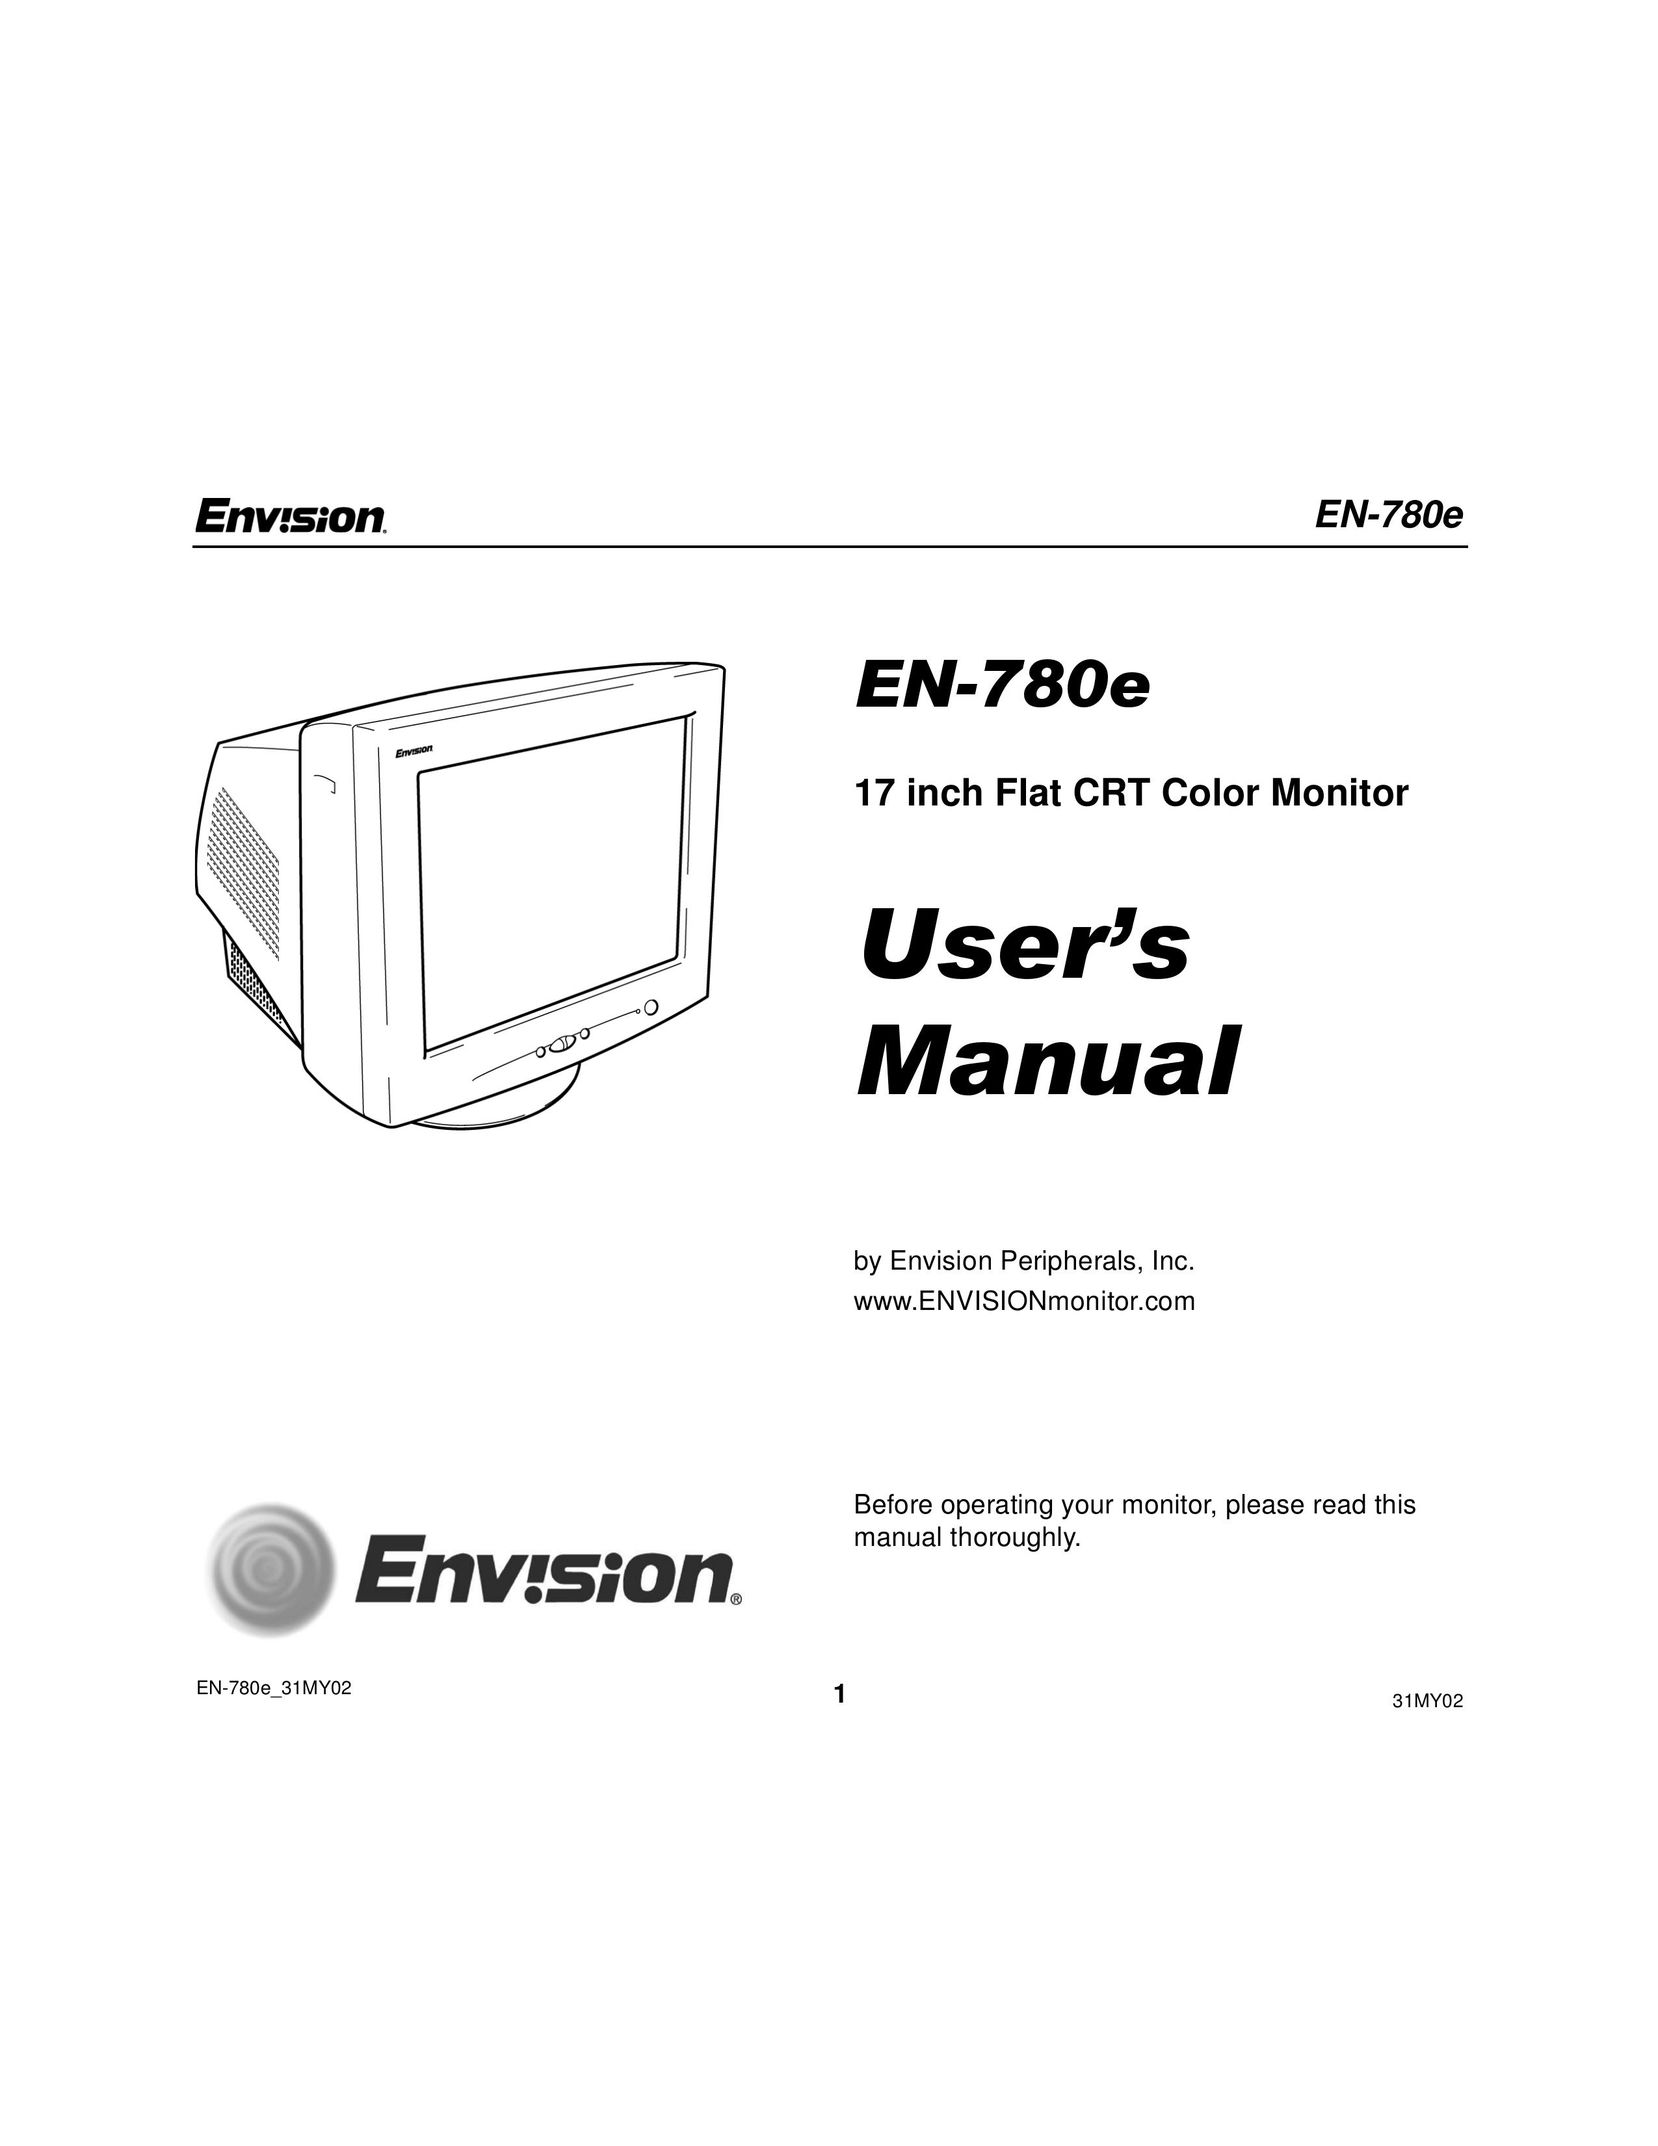 Envision Peripherals EN-780e 17 Computer Monitor User Manual